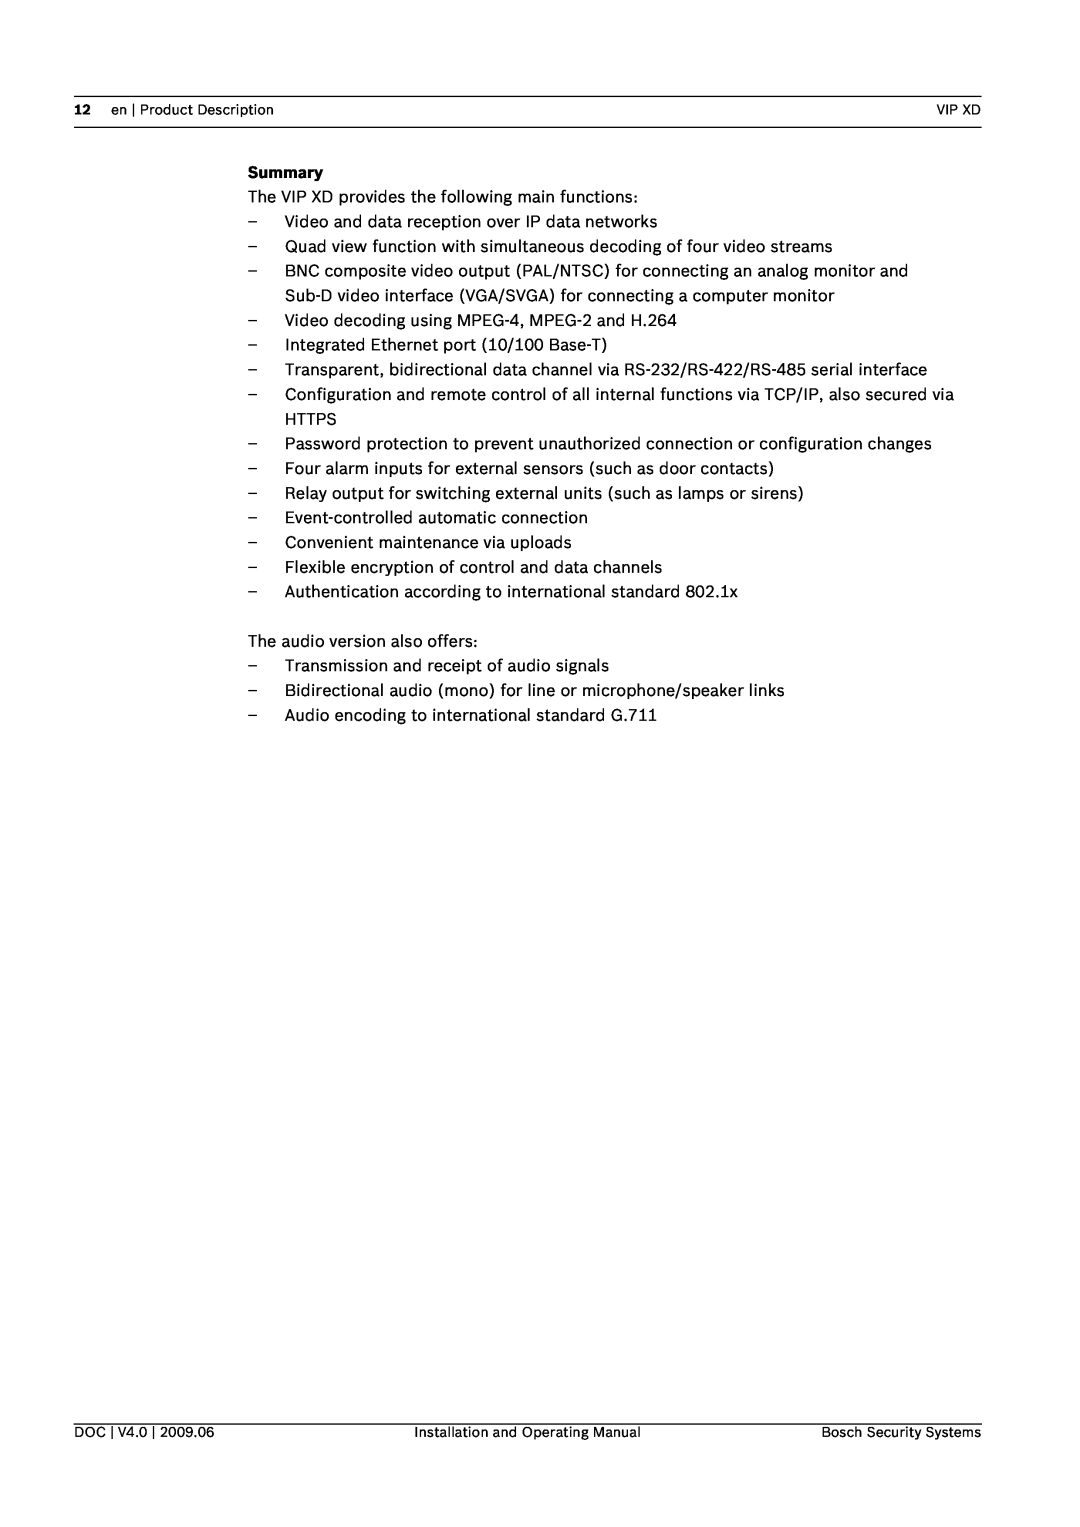 Bosch Appliances XD, VIP manual Summary 